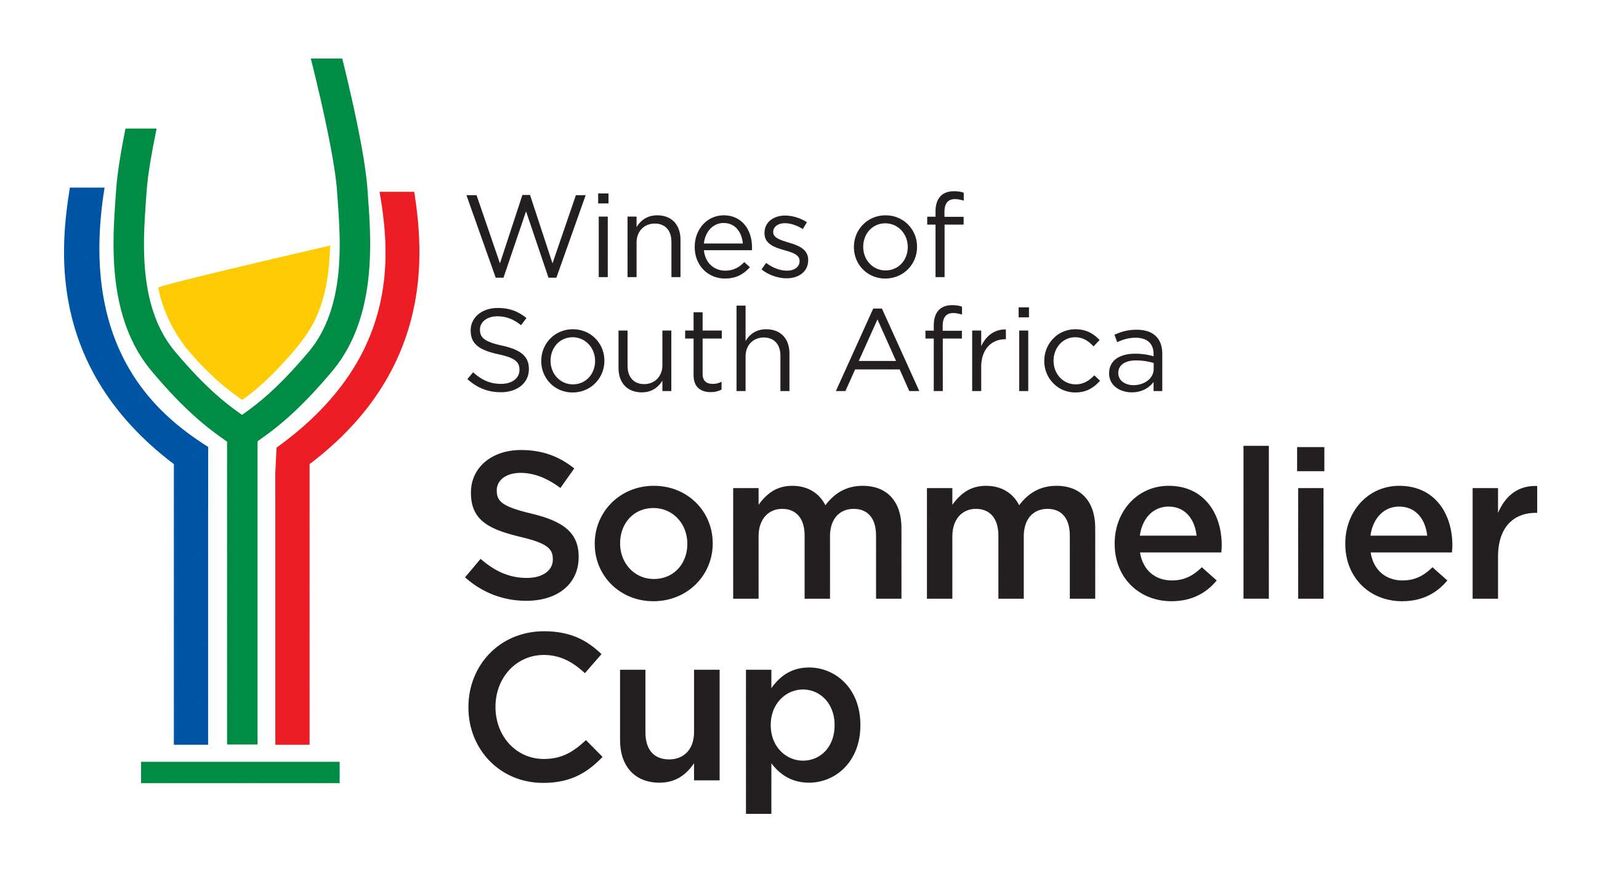 WINES OF SOUTH AFRICA VERANSTALTET INTERNATIONALEN SOMMELIER CUP